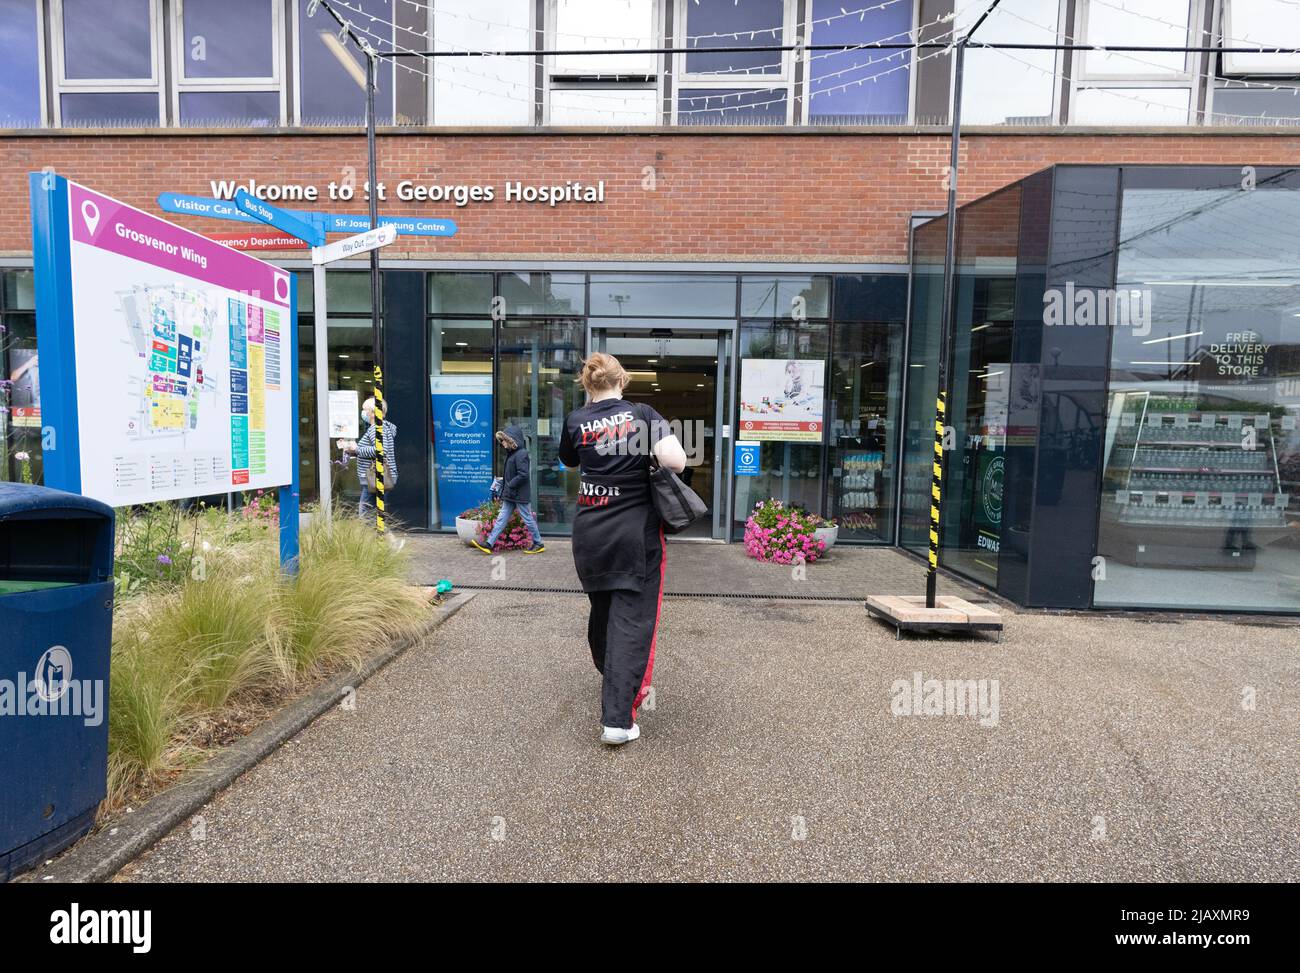 NHS London Hospitals; St Georges Hospital London UK; entrée à l'hôpital d'enseignement St Georges, Tooting, Londres UK Banque D'Images